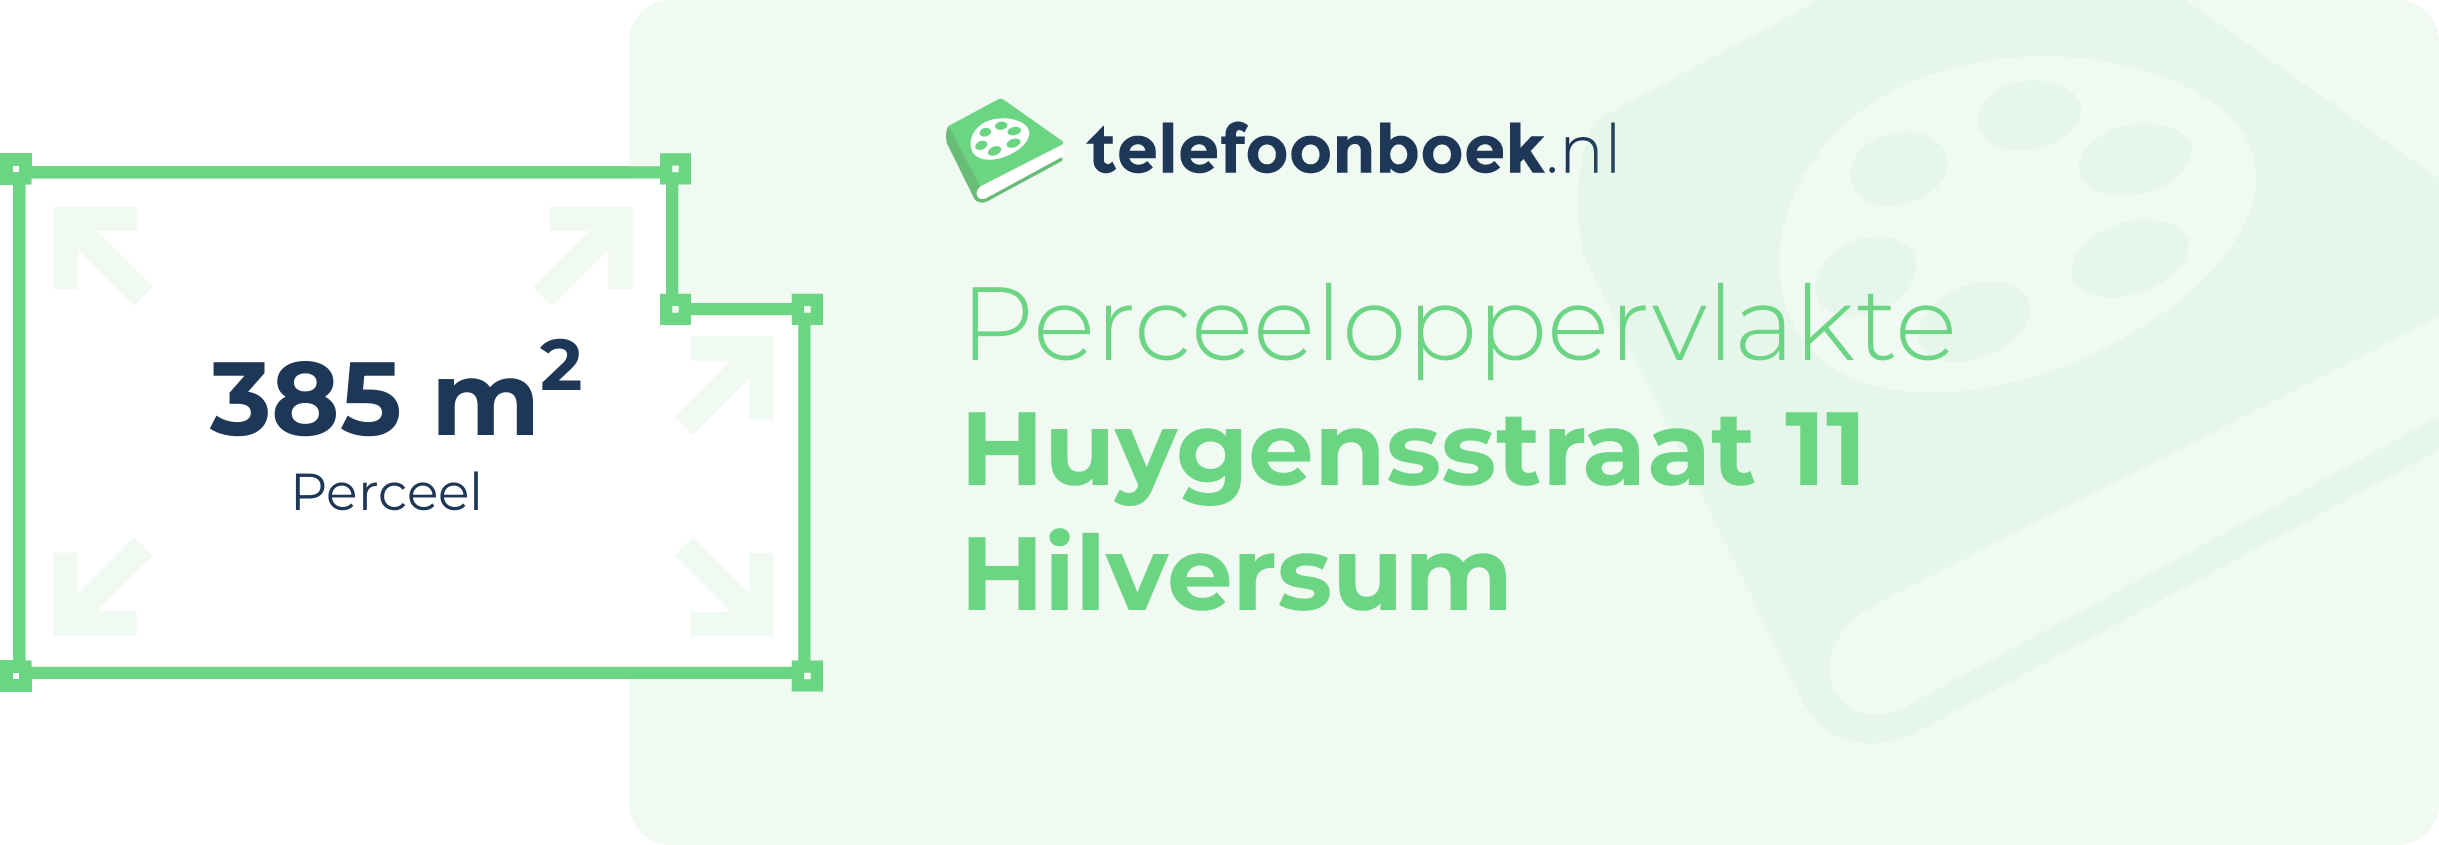 Perceeloppervlakte Huygensstraat 11 Hilversum